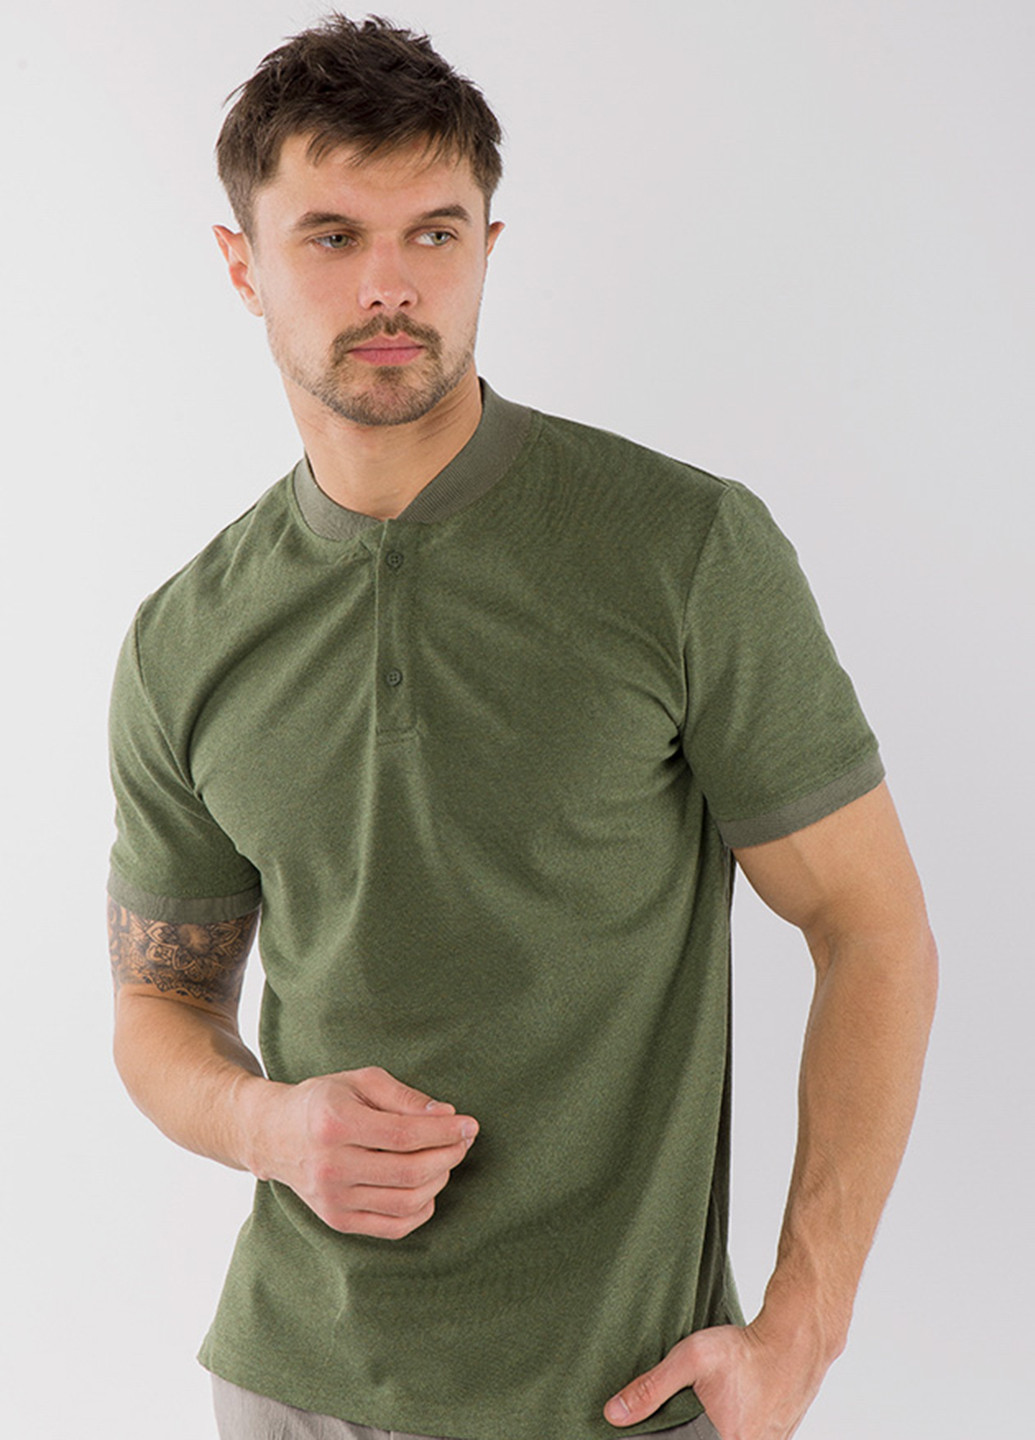 Зеленая футболка-поло для мужчин MR 520 однотонная